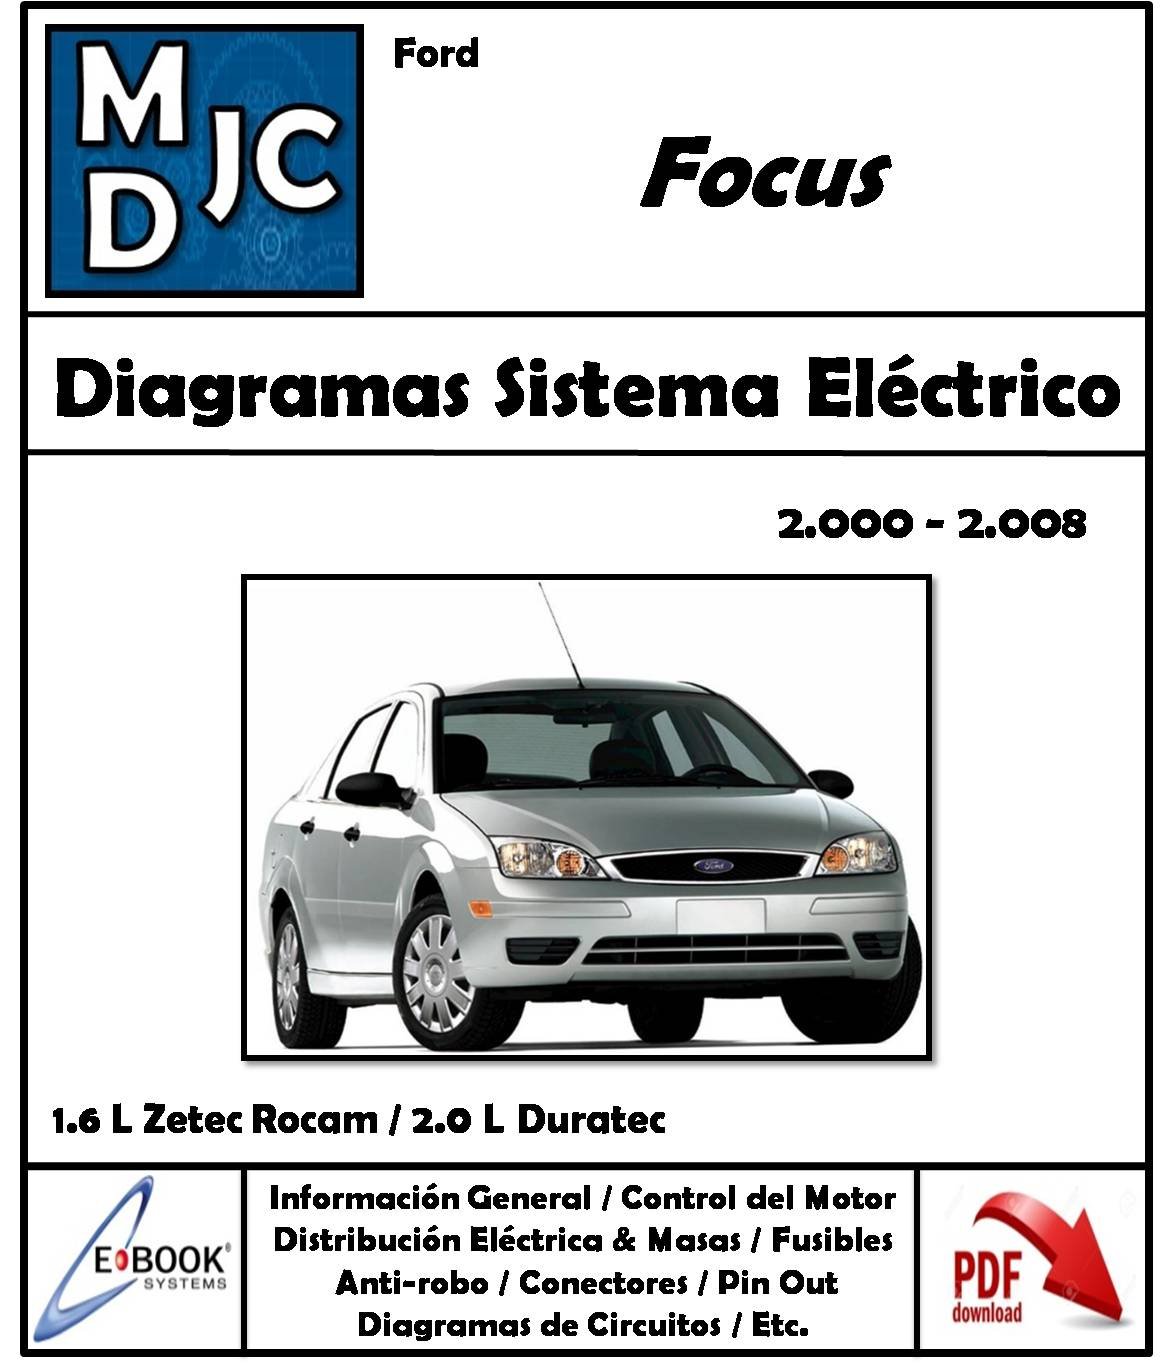 Ford Focus 2000 - 2008